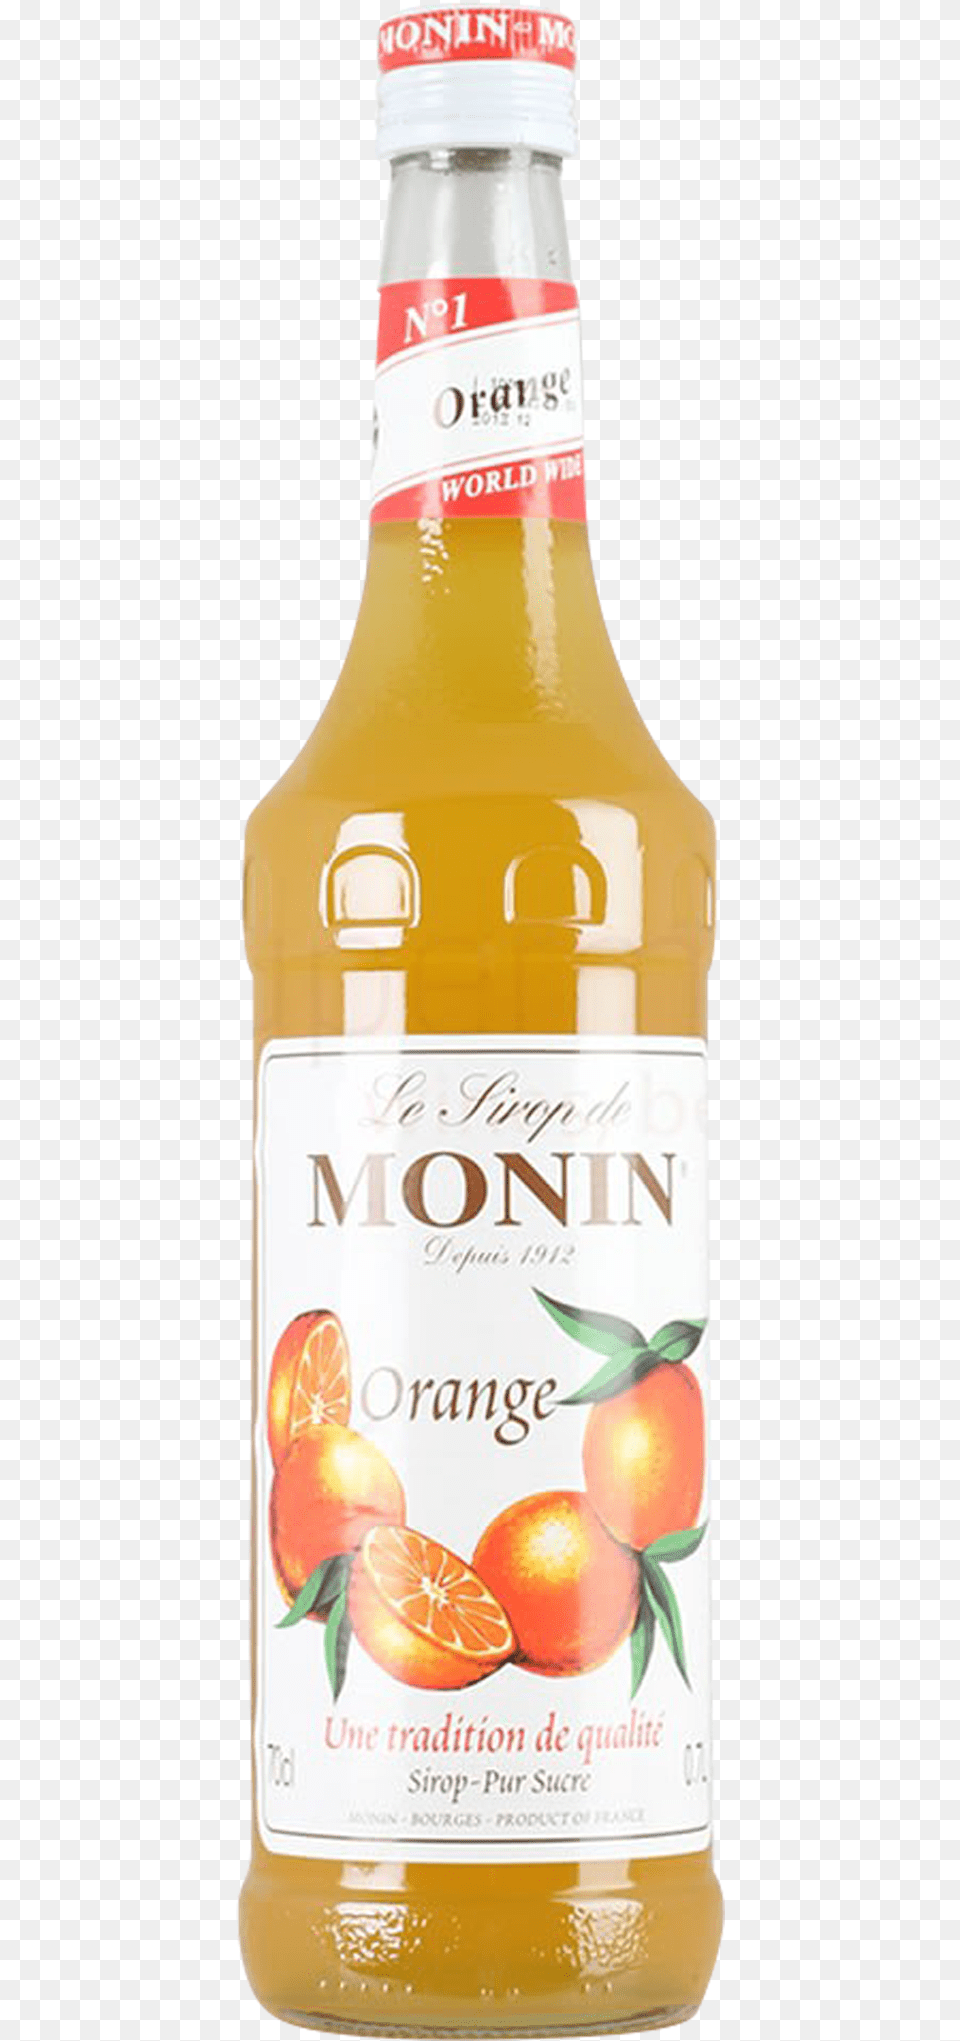 Monin Orange Syrup Syrups And Cordials, Beverage, Juice, Produce, Plant Png Image